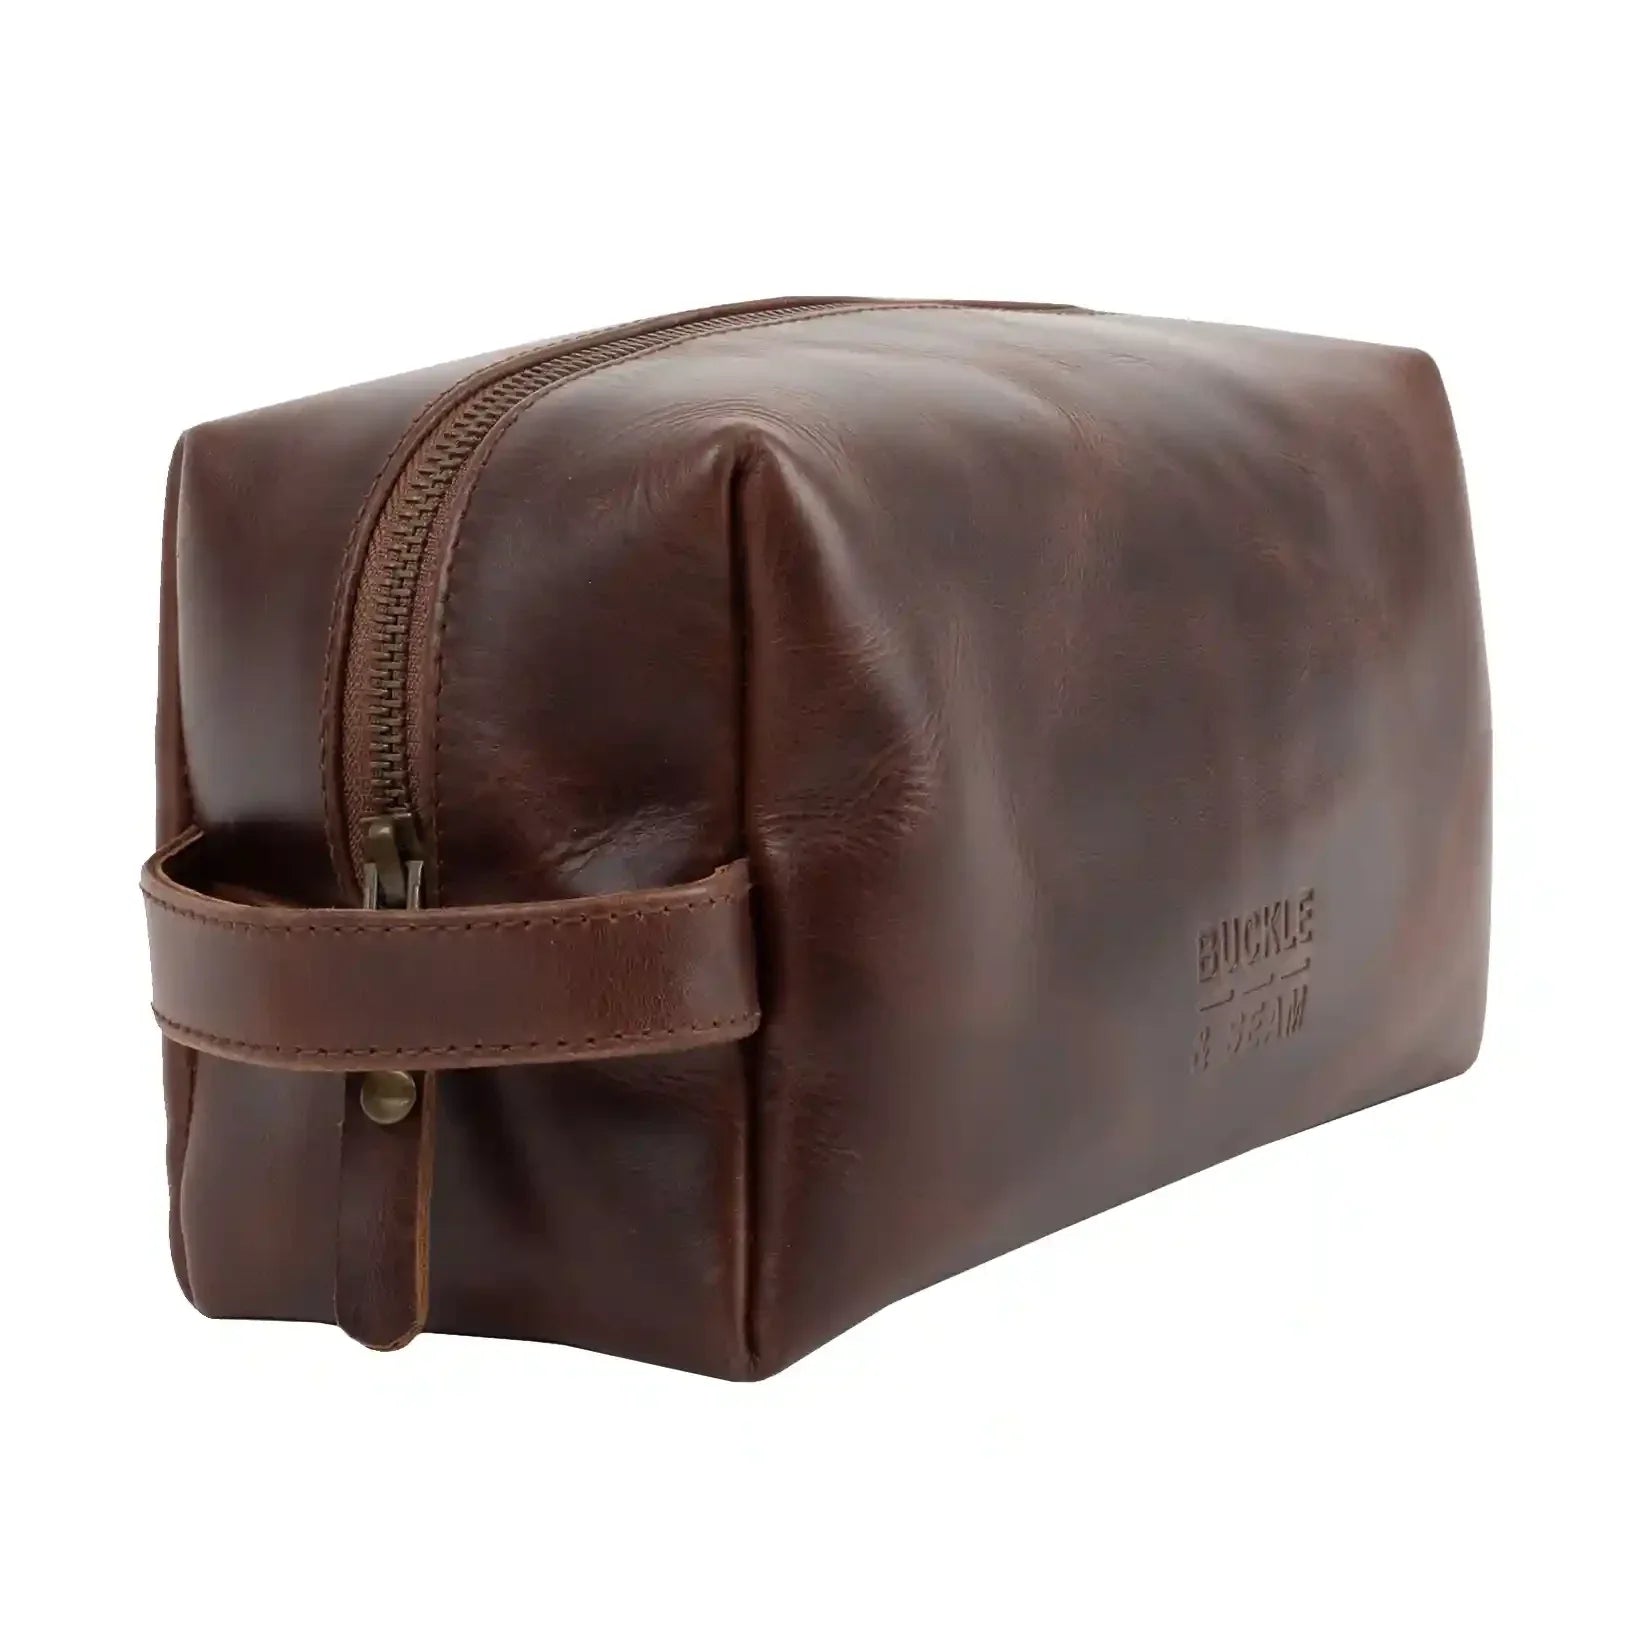 Buckle & Seam wash bag Everest 22 cm - Brown